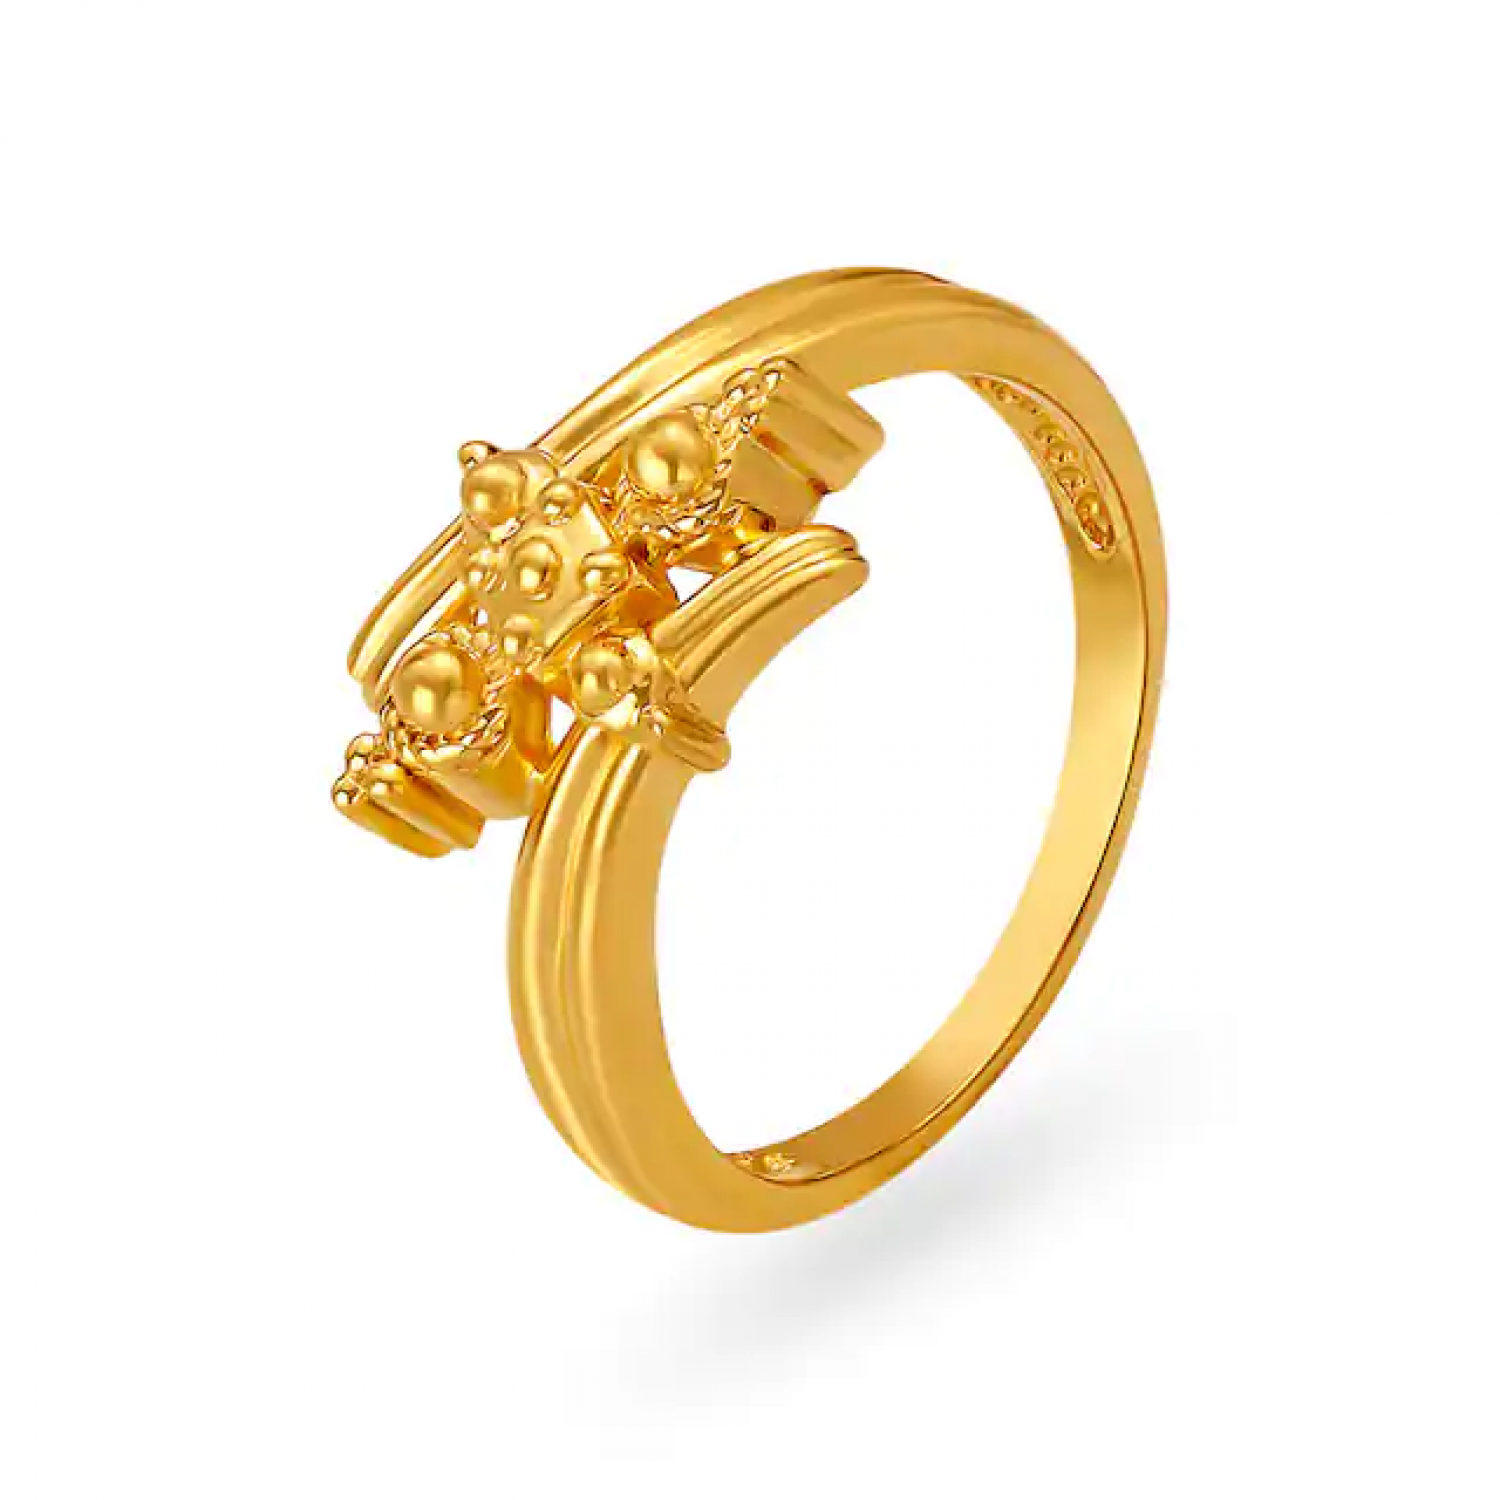 Buy 22K Gold Finger Ring With Balaji Engraving Online |  store.krishnajewellers.com